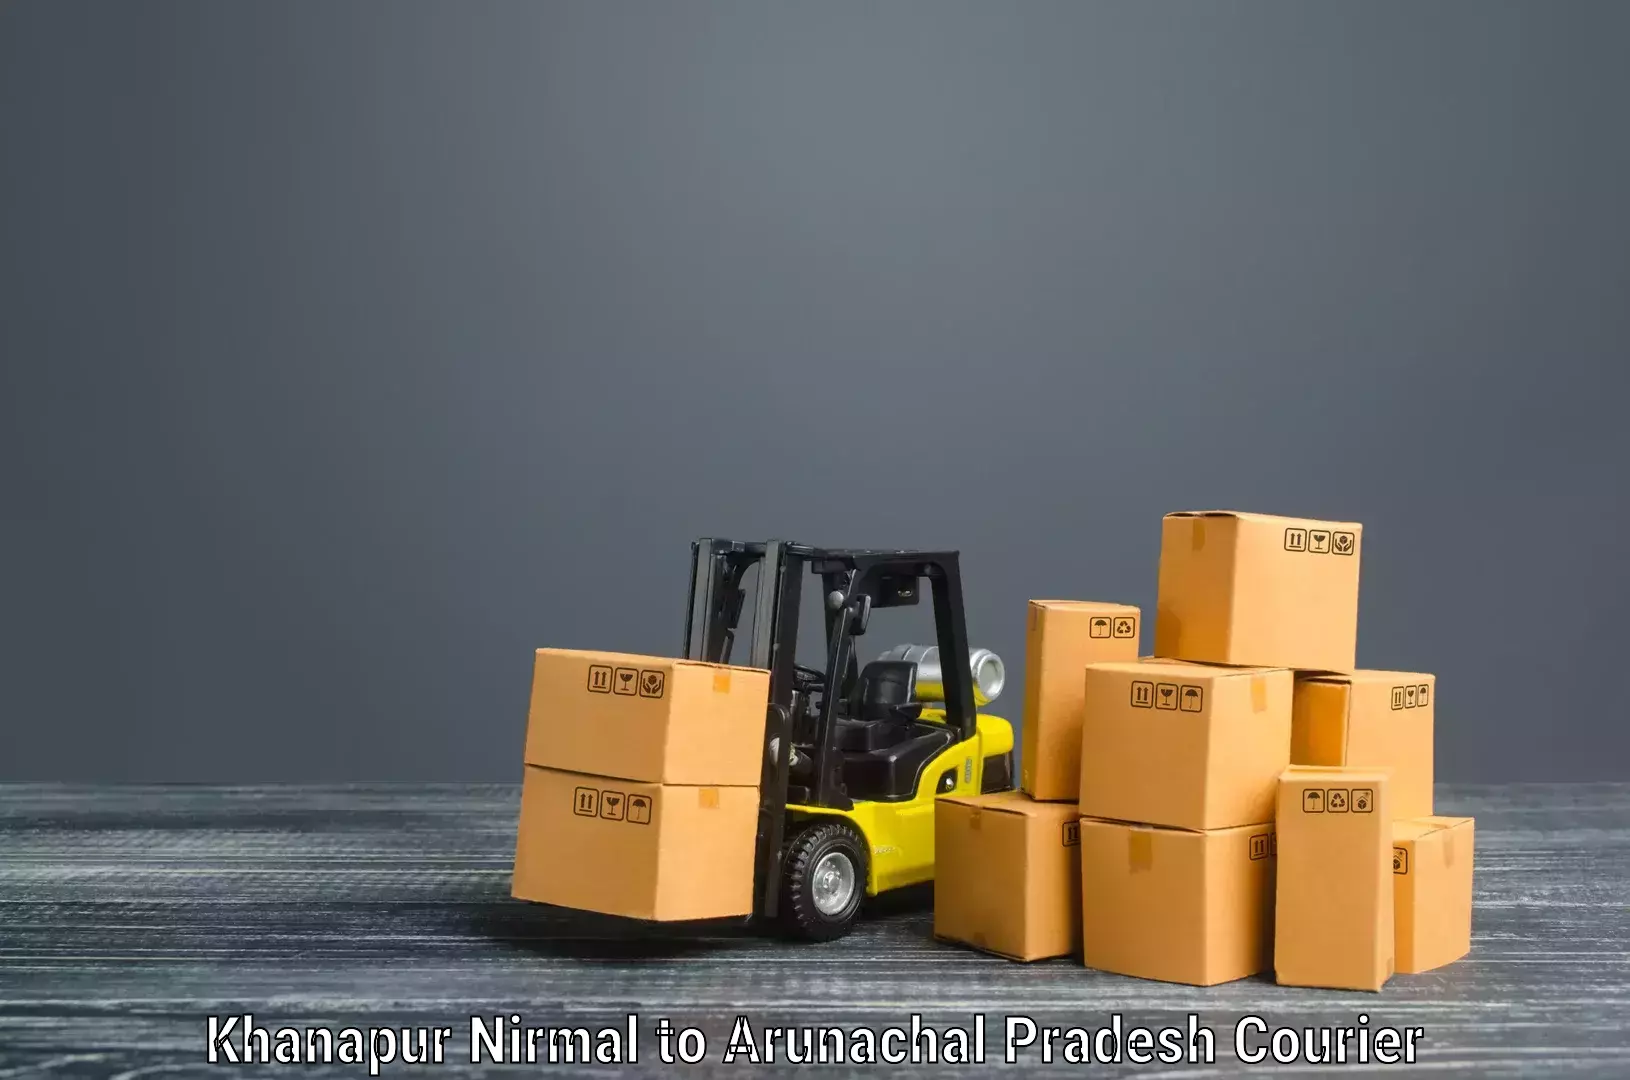 Professional packing services Khanapur Nirmal to Changlang